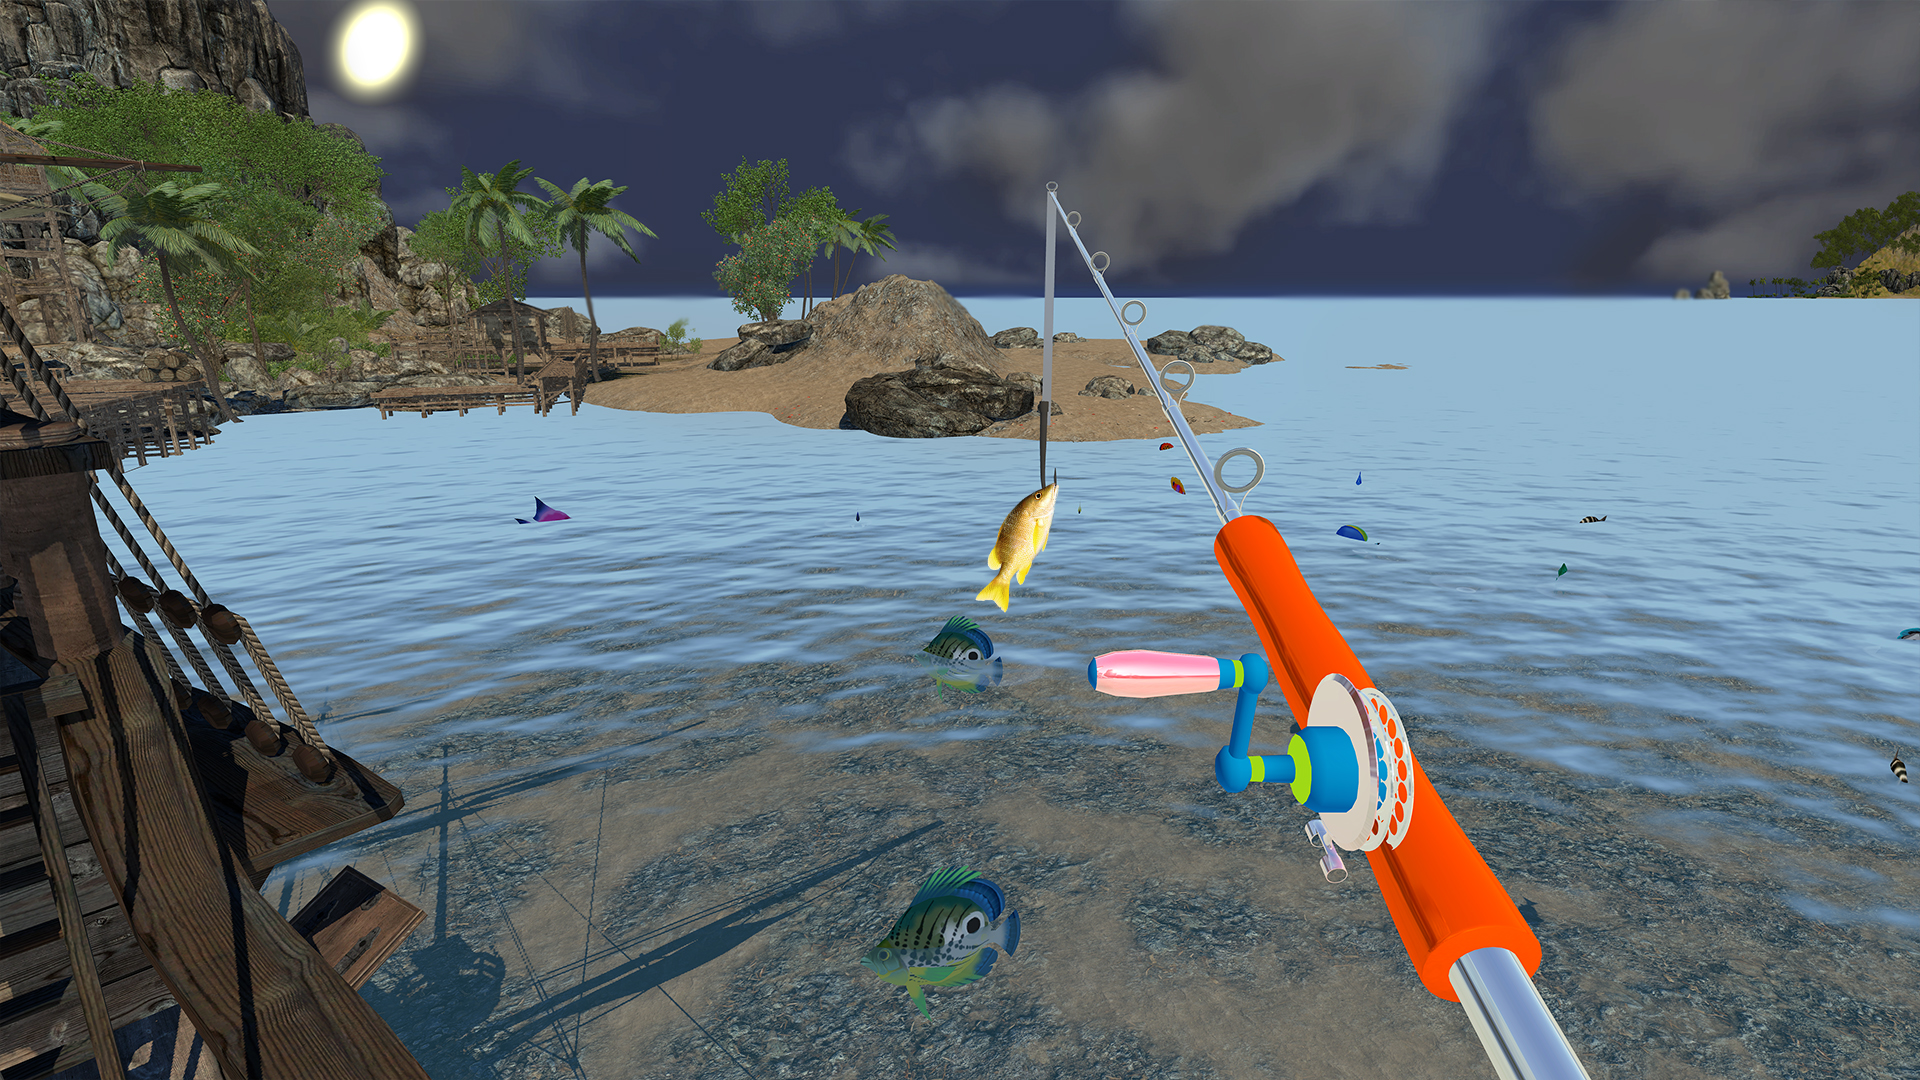 Fishing Simulator on Steam